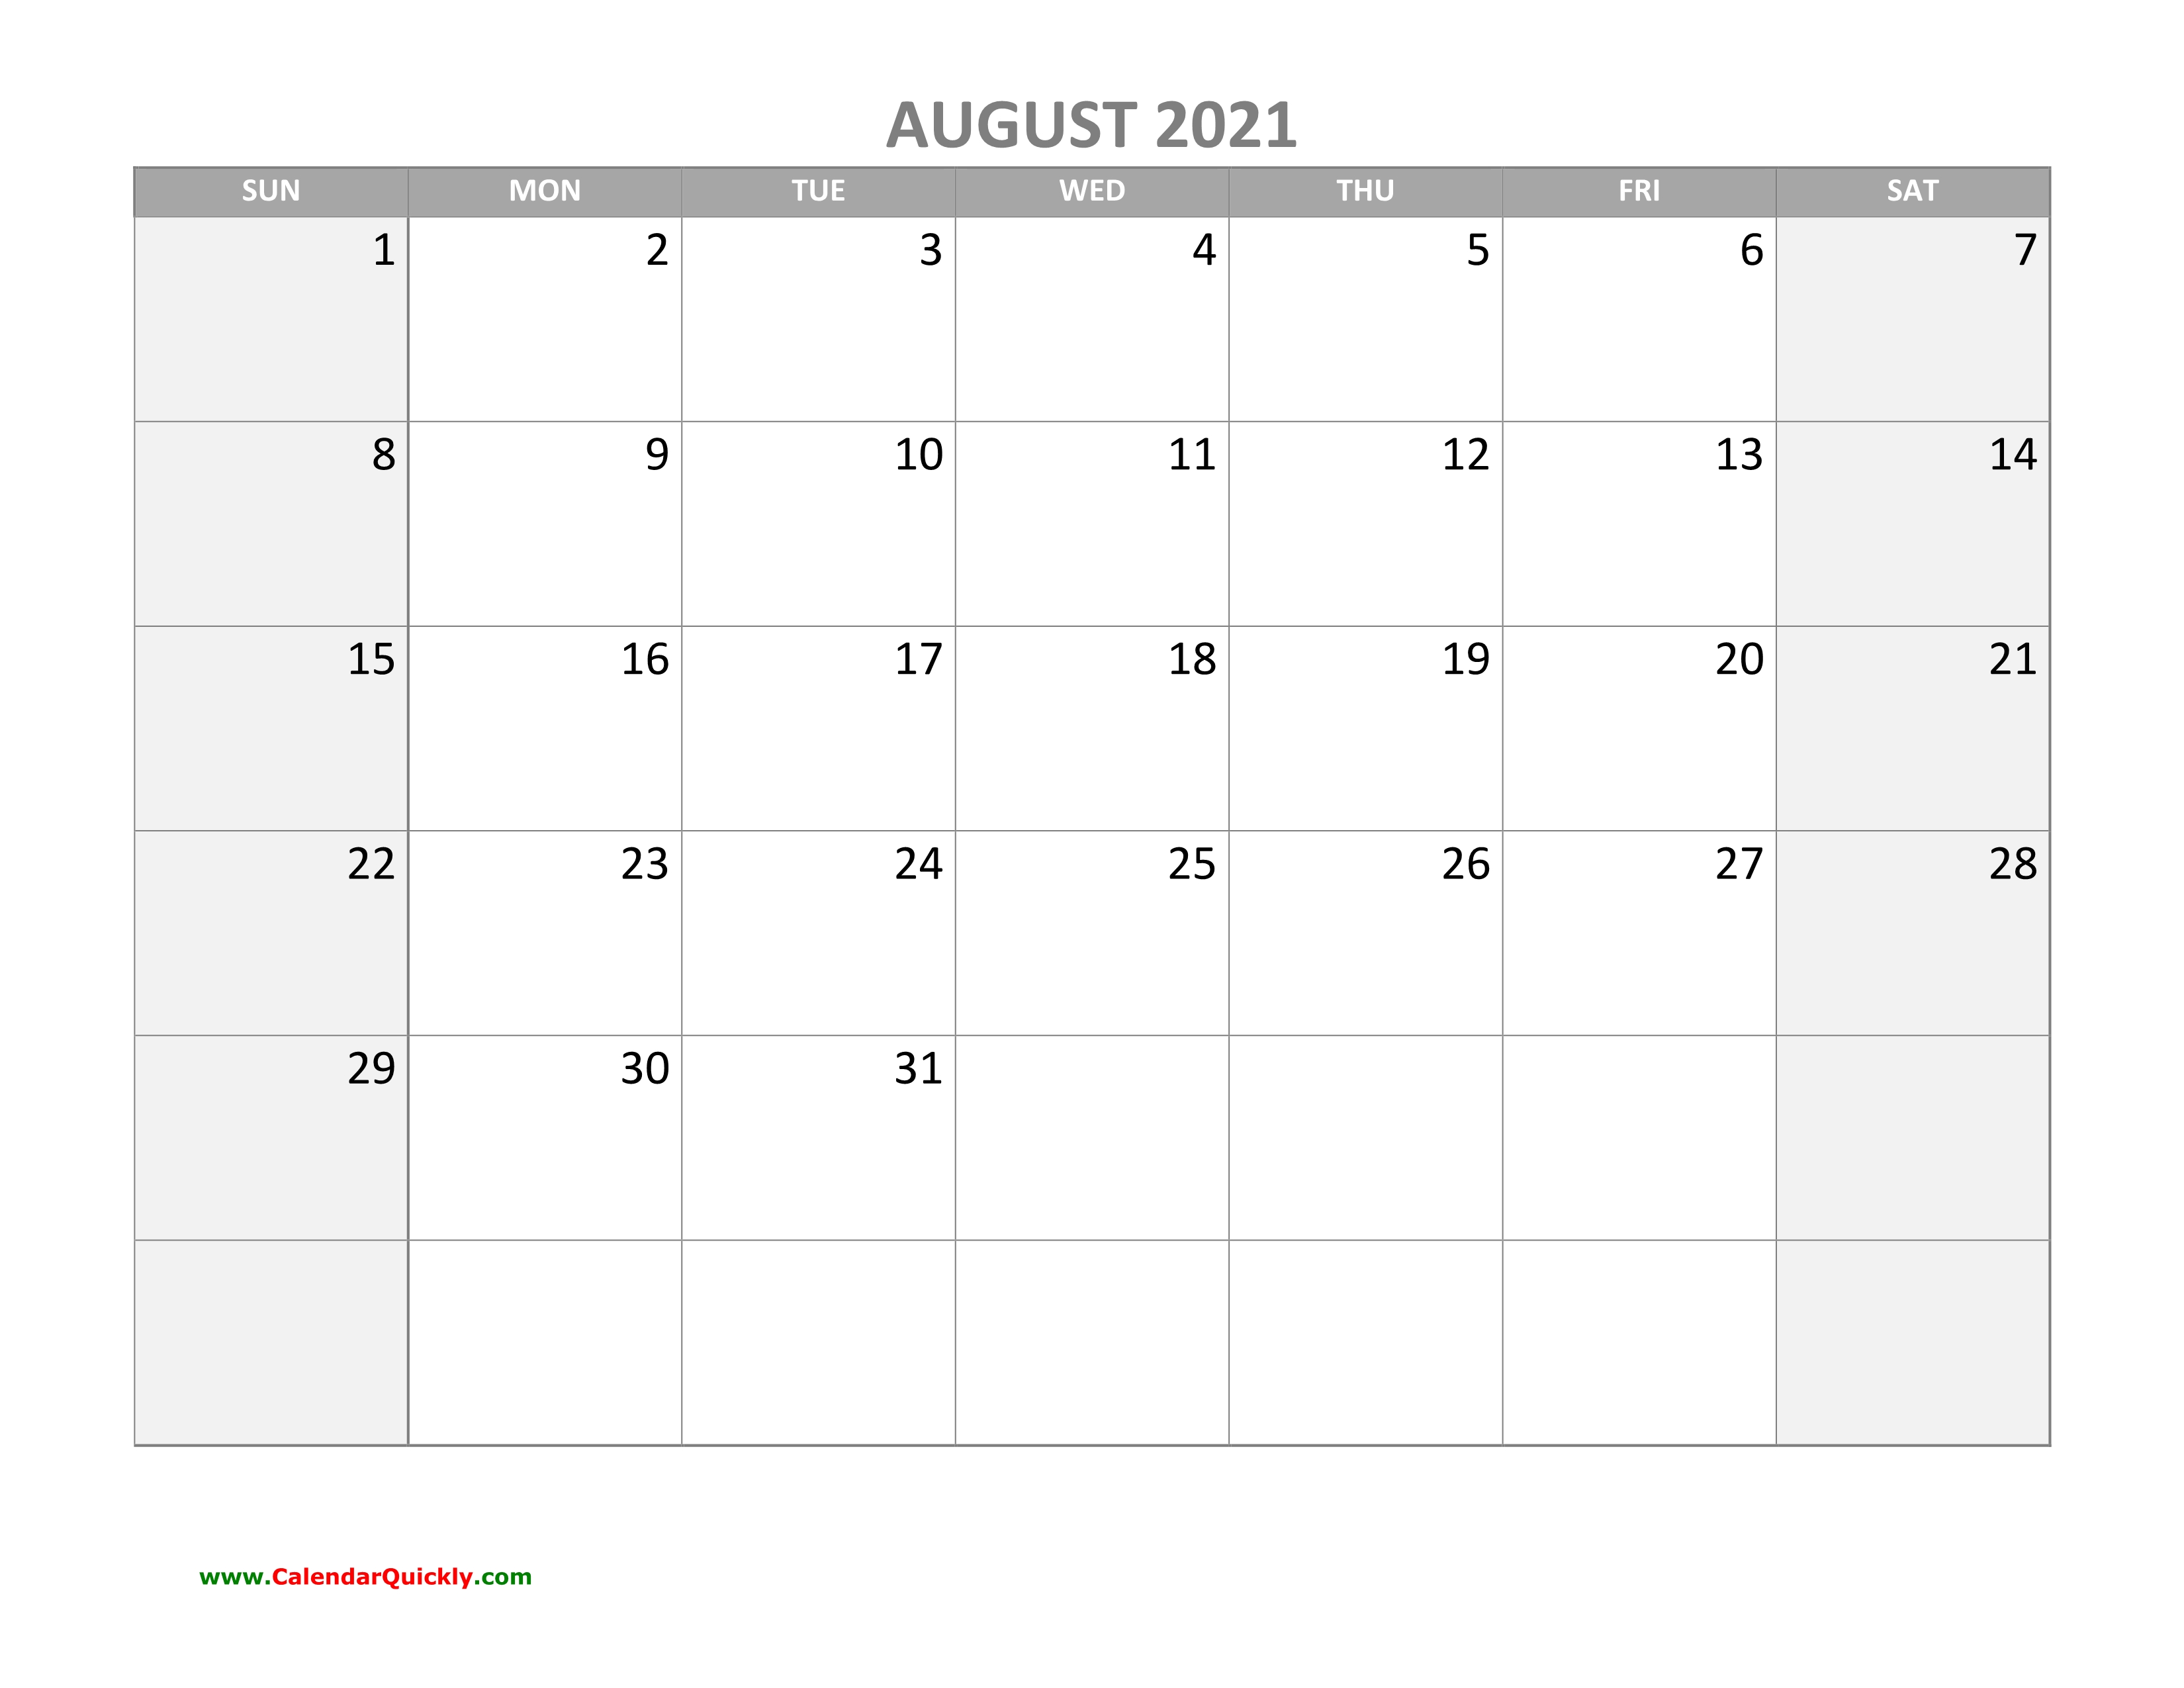 August Calendar 2021 With Holidays | Calendar Quickly Free Printable August 2021 Calendar With Holidays